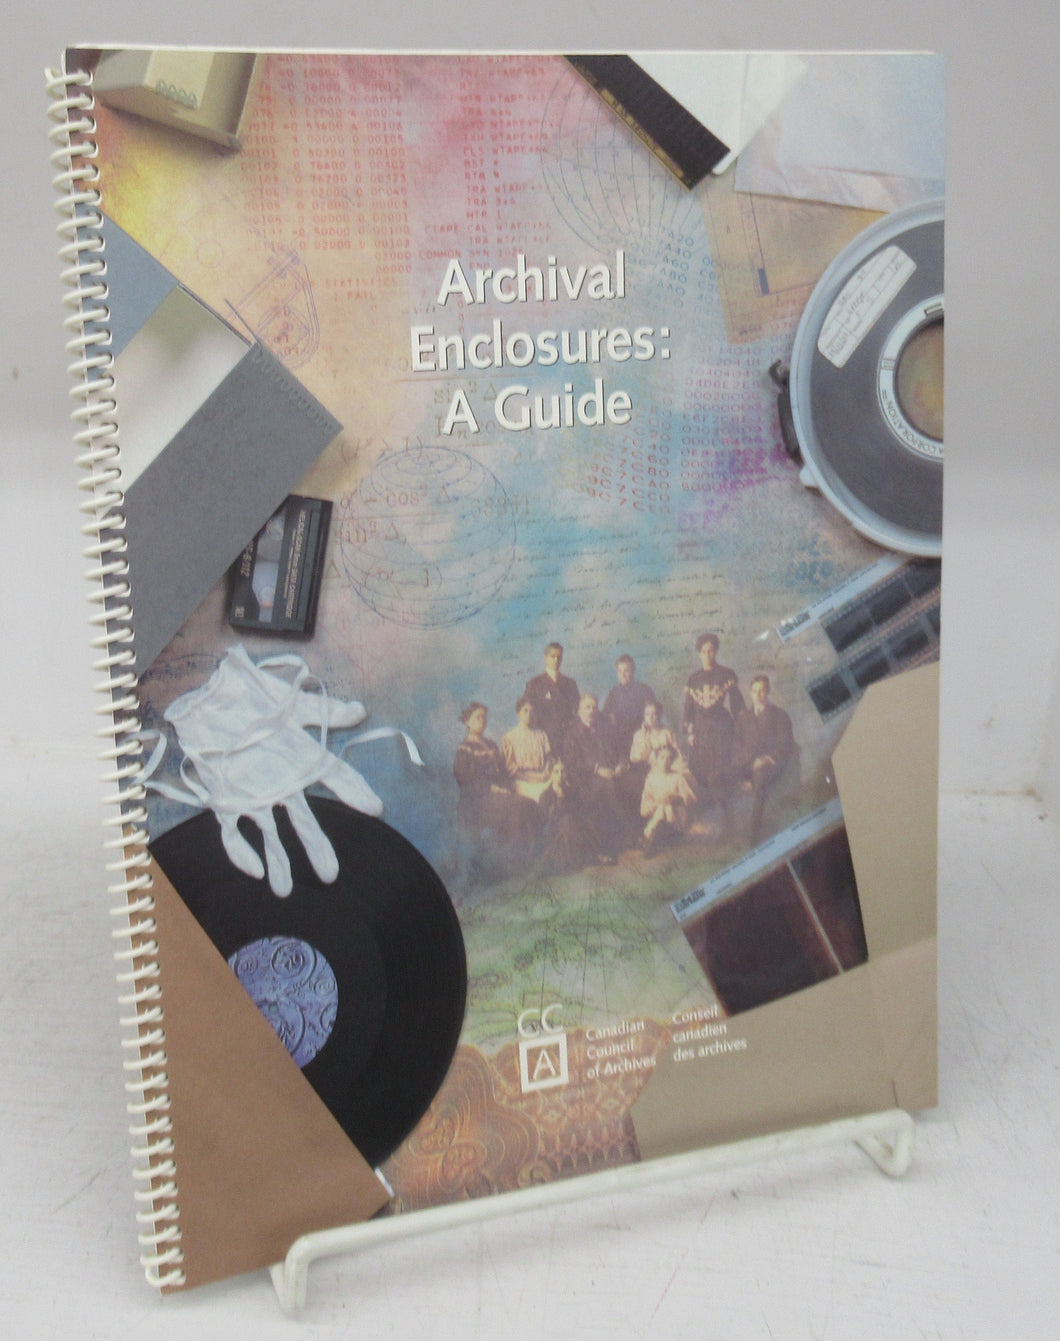 Archival Enclosures: A Guide